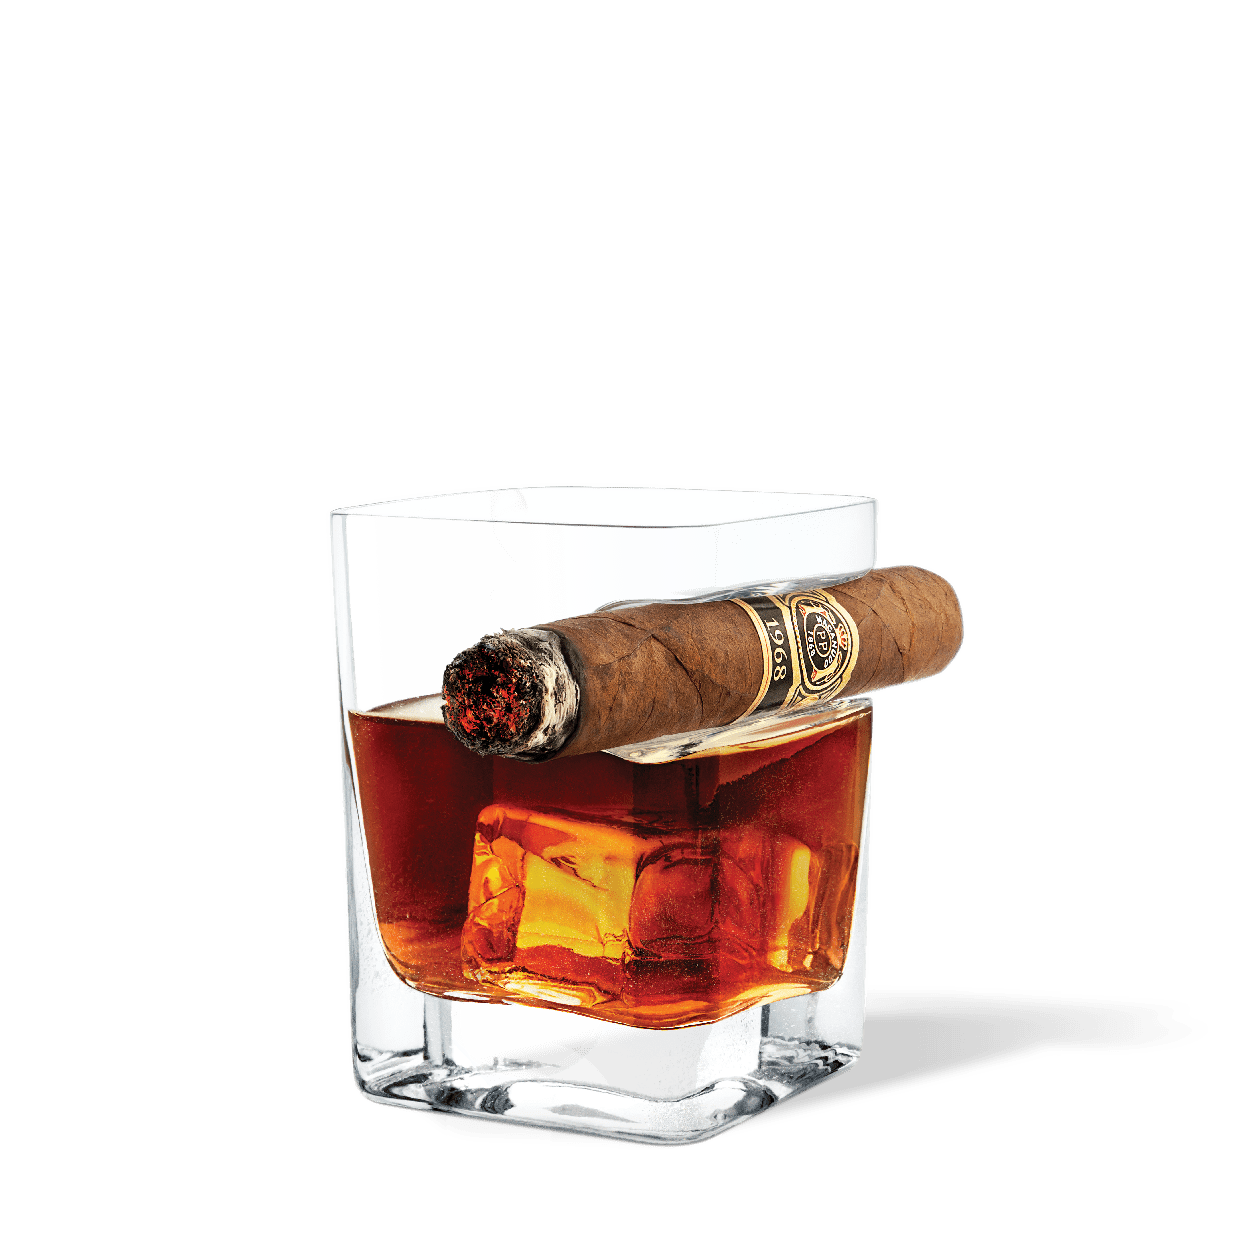 Corkcicle cigar glass